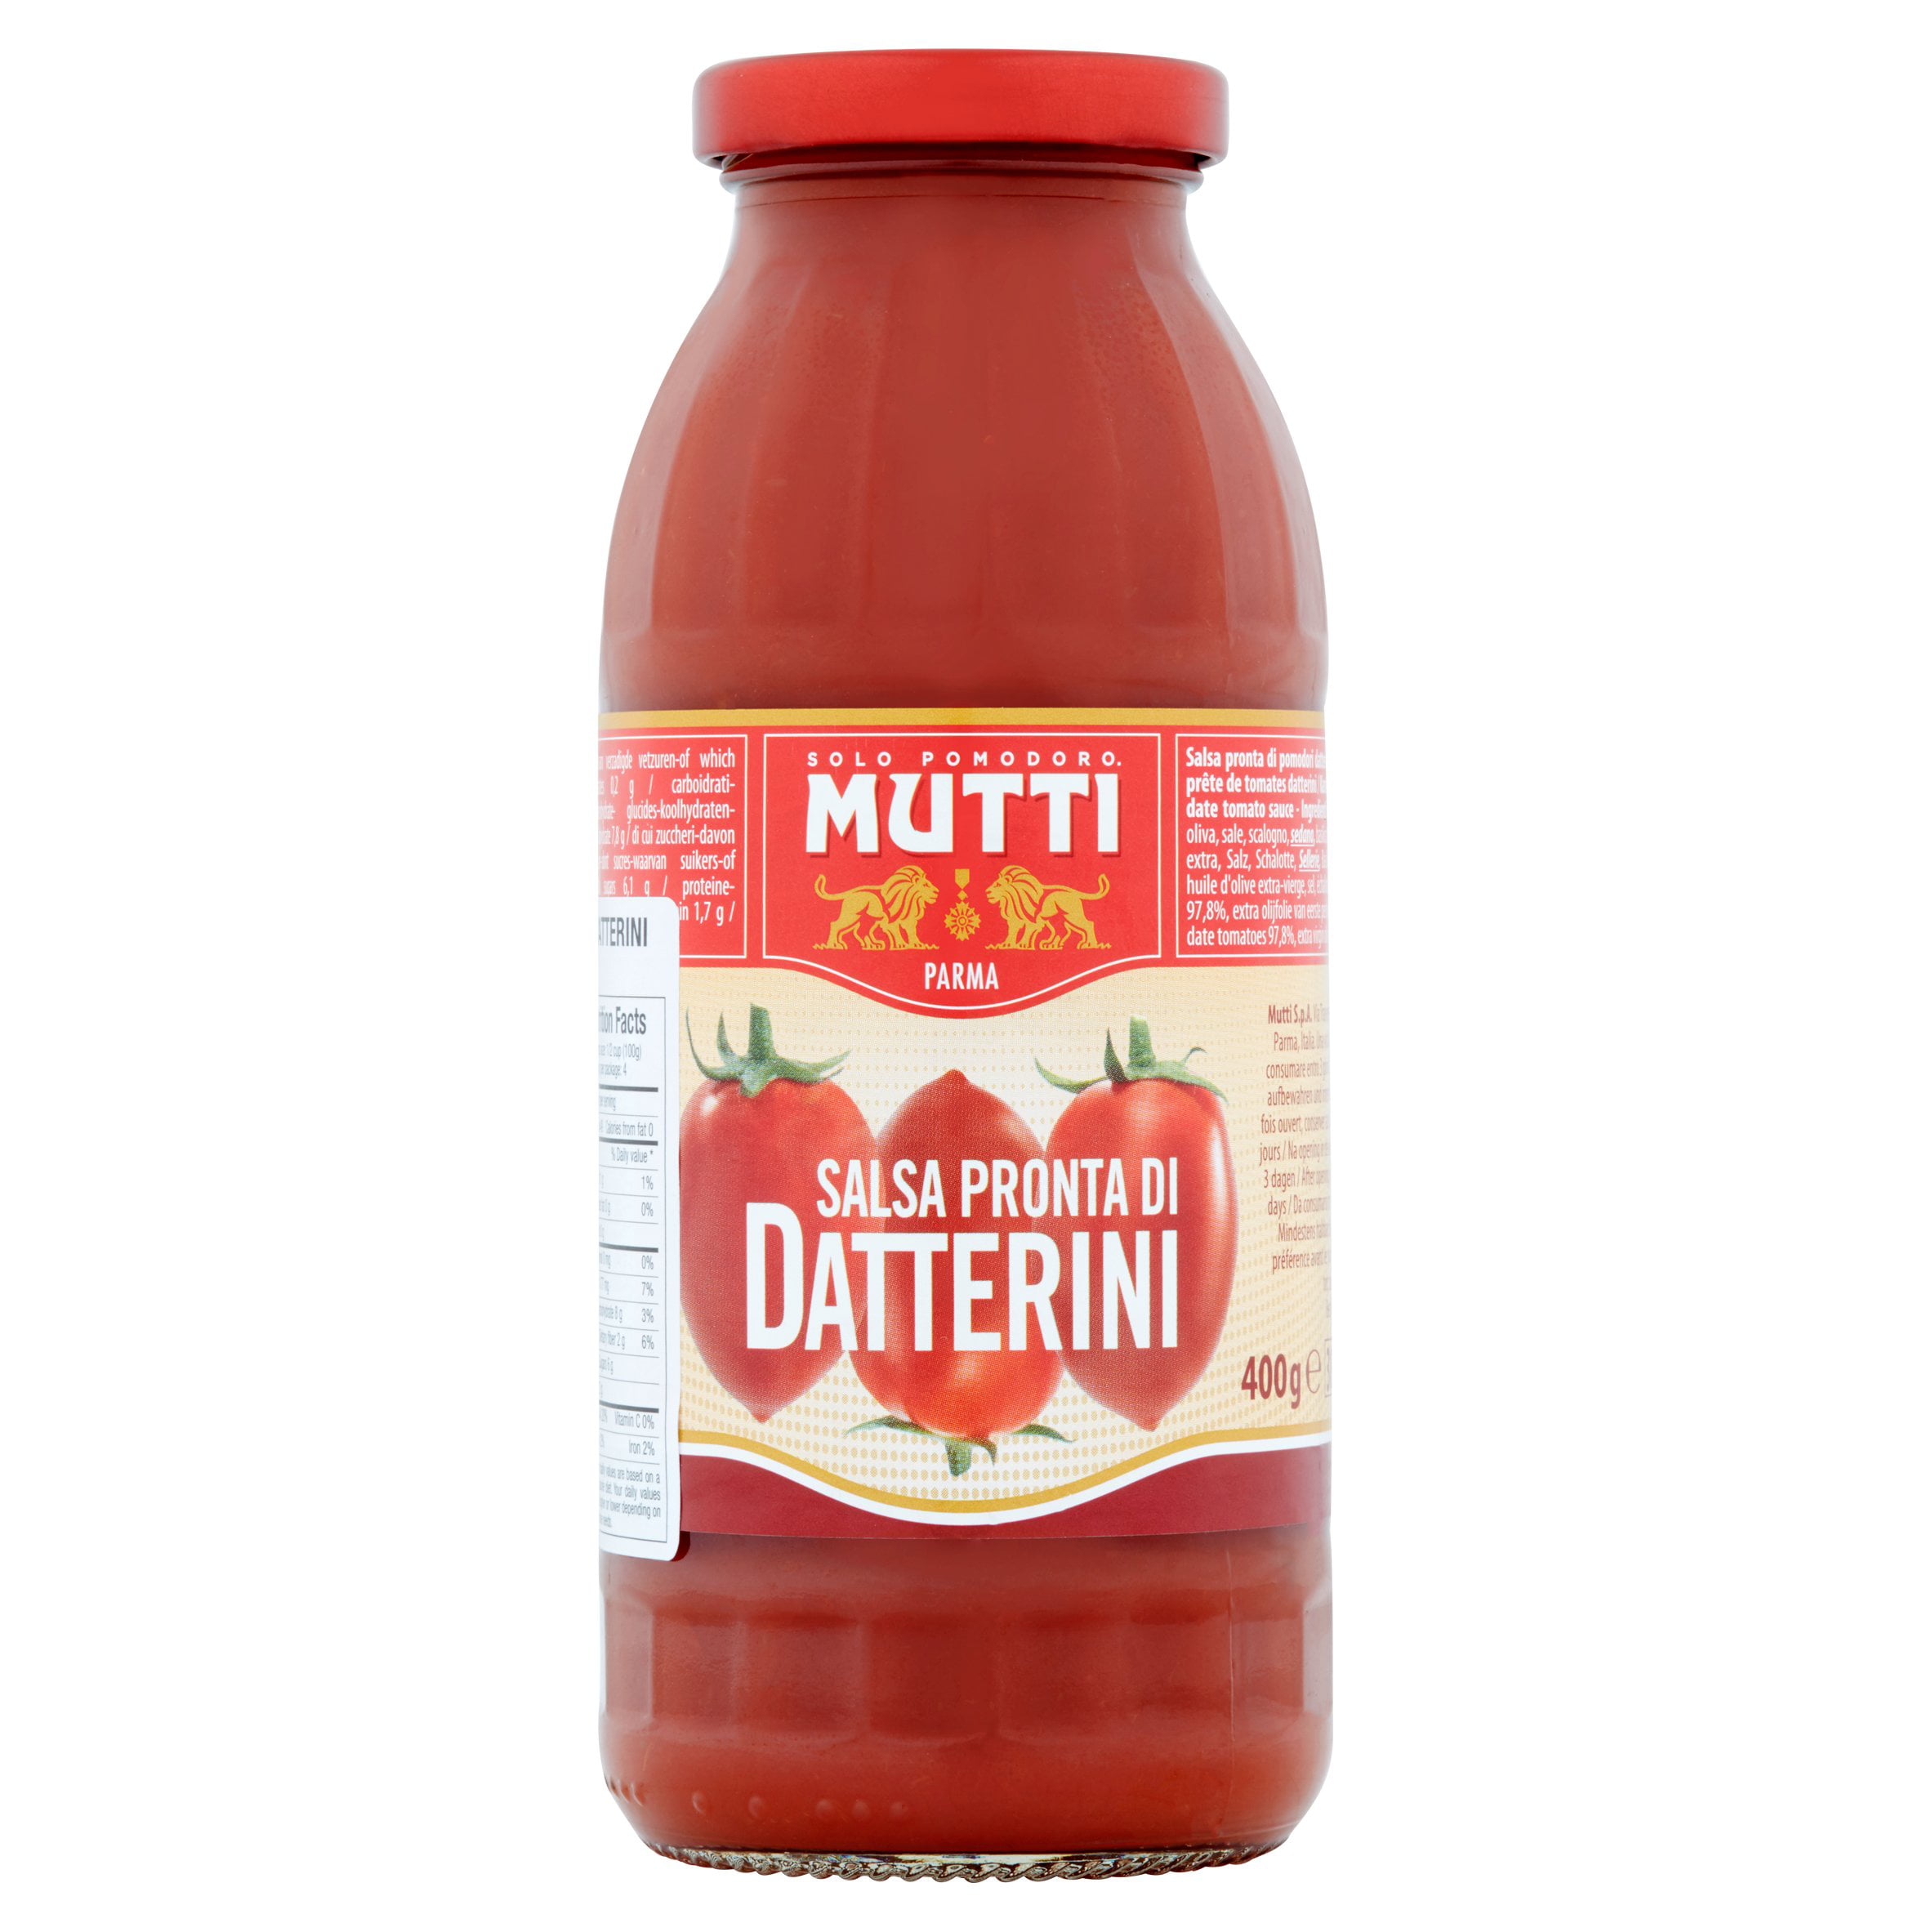 Mutti Sauce Tomato Datterini,14 Oz (Pack Of 12) - Walmart.com - Walmart.com